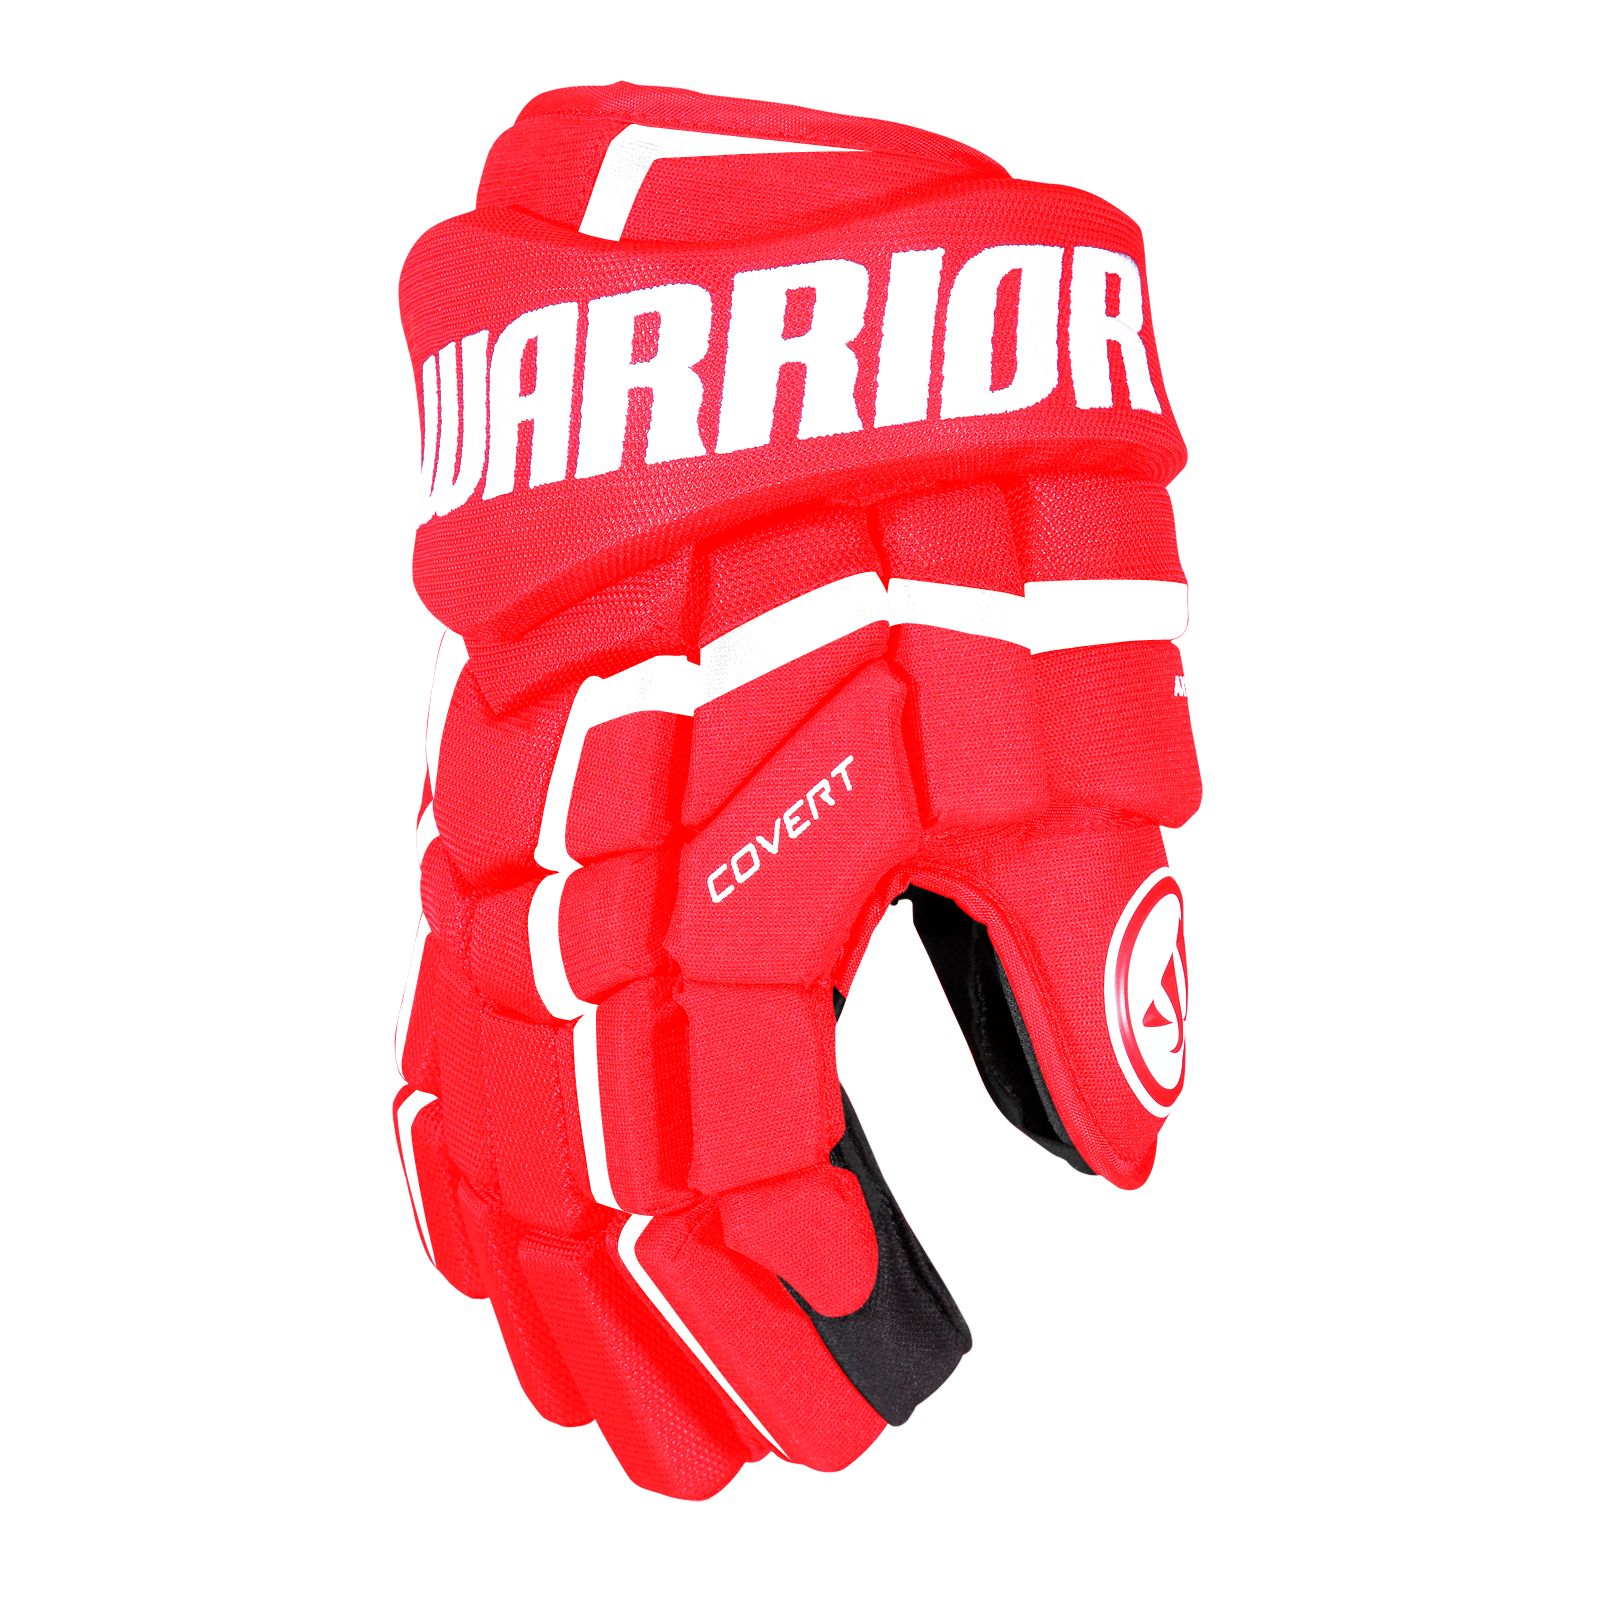 Warrior Covert QRL4 Glove Men